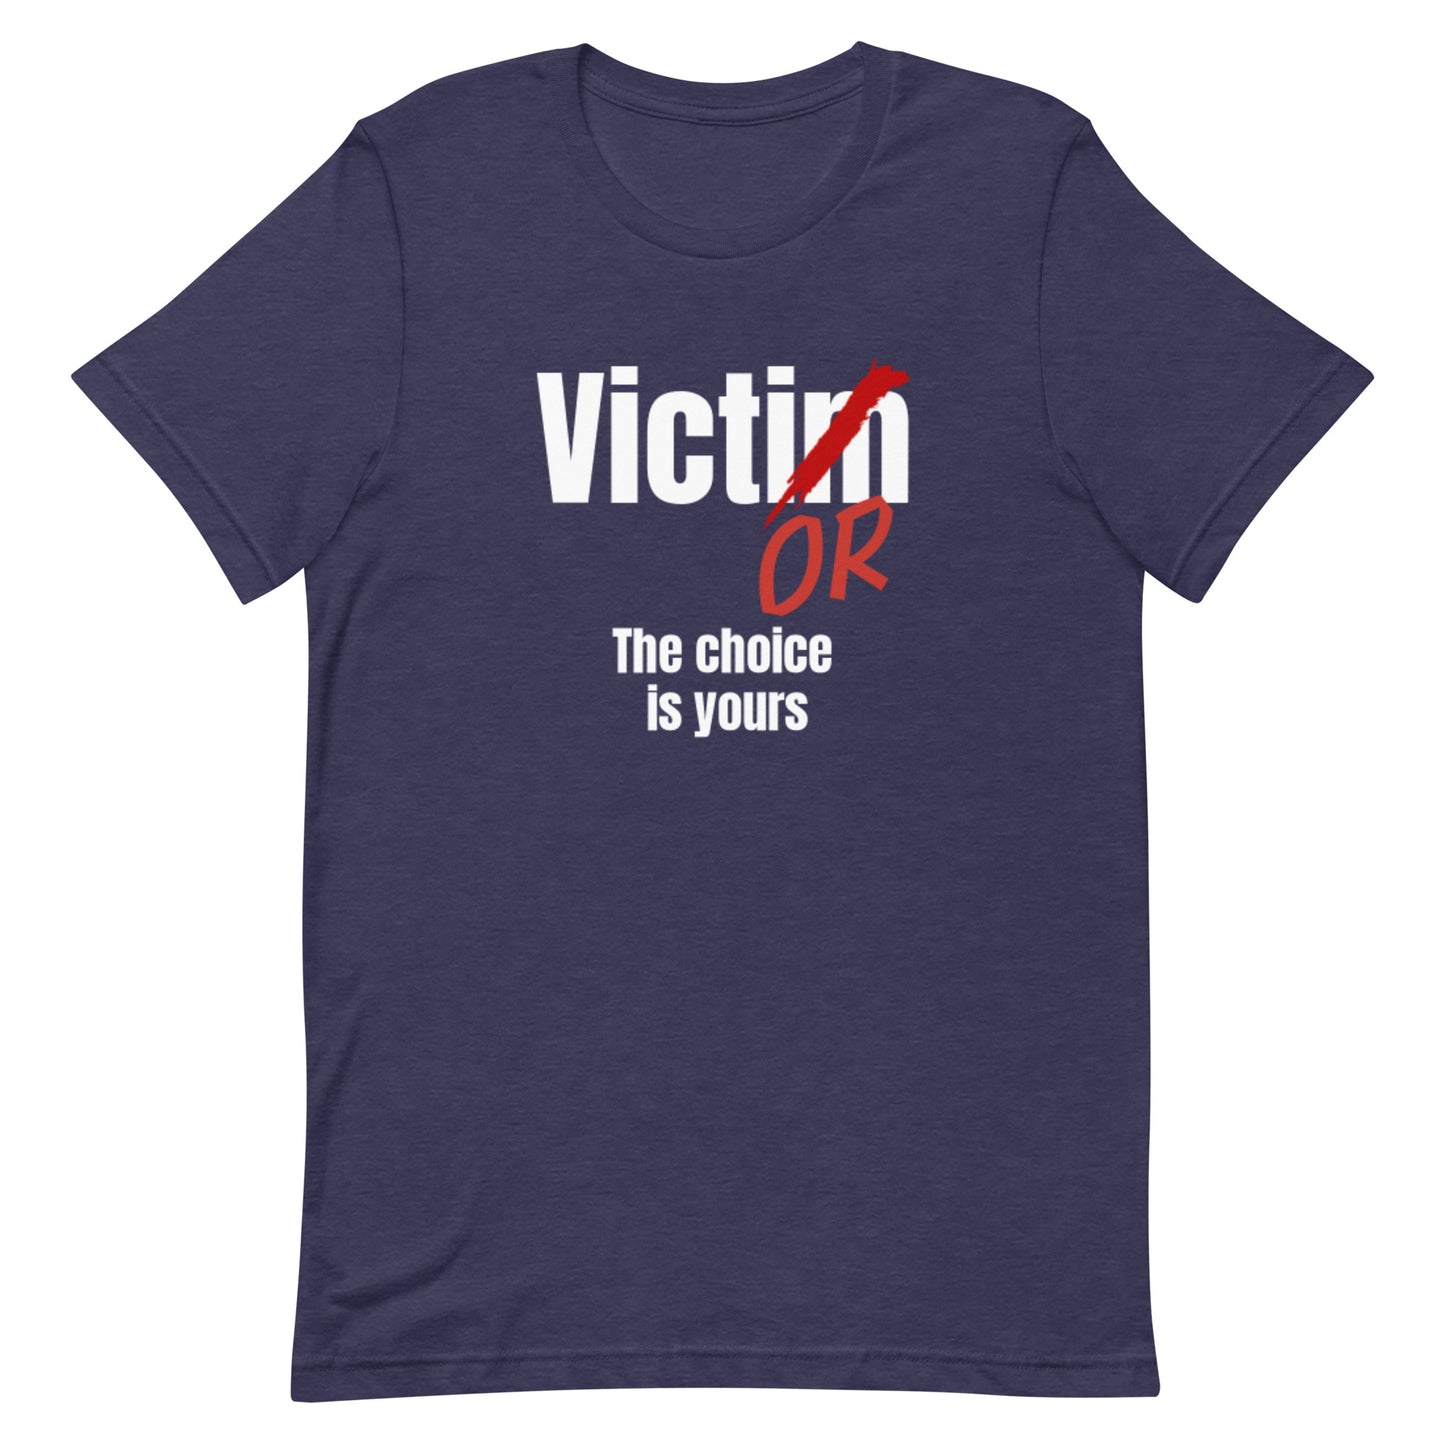 Unisex t-shirt "Victor"